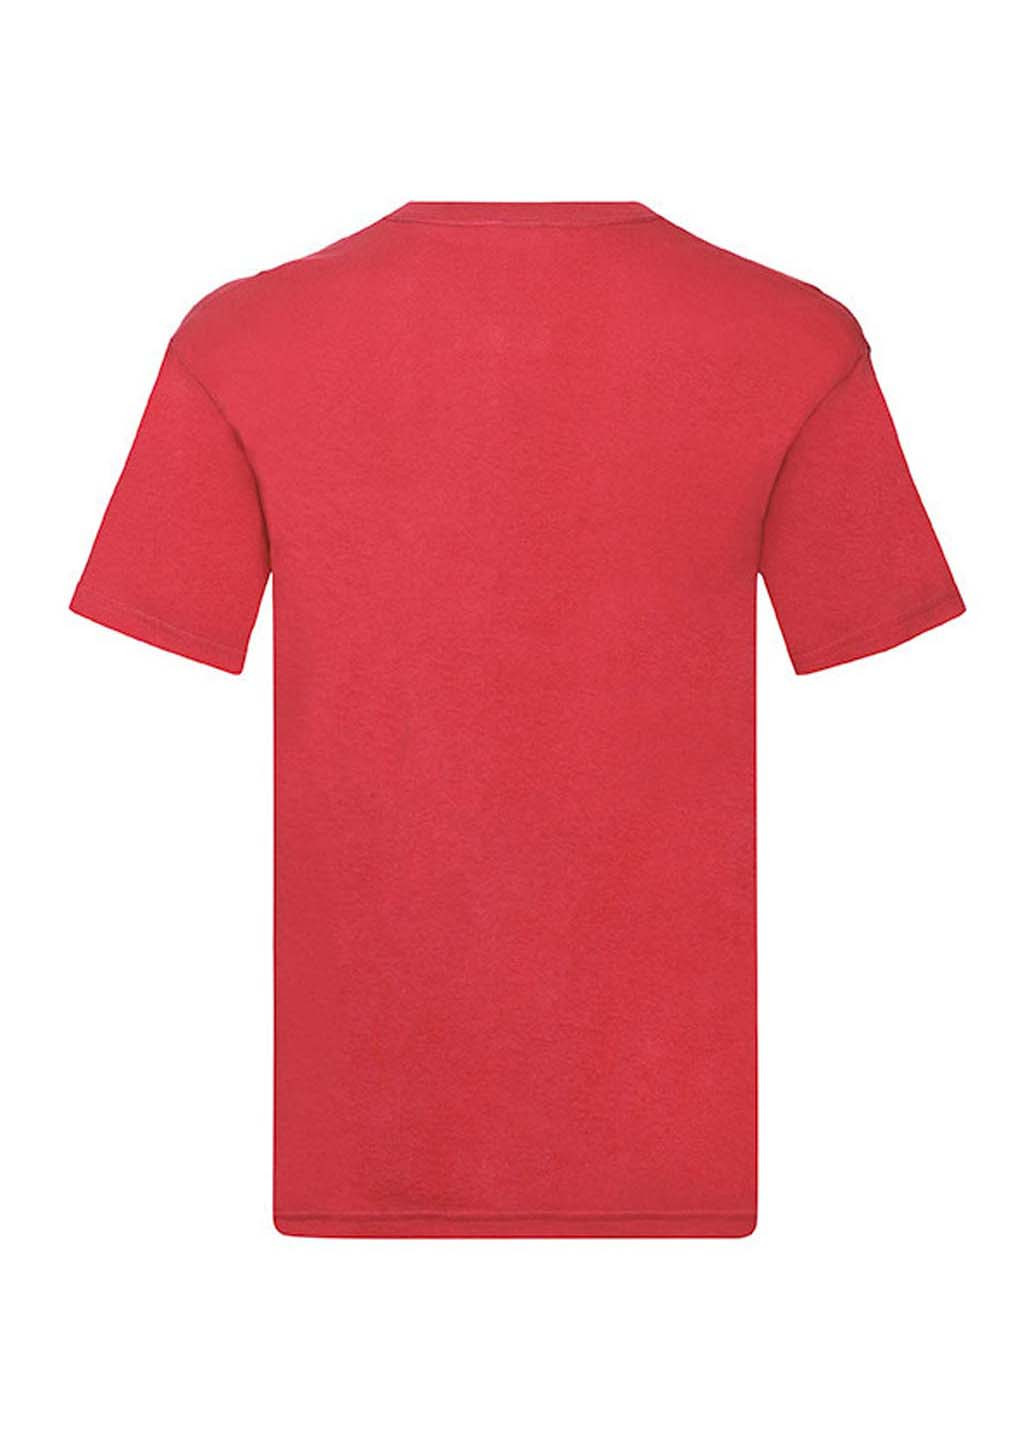 Красная футболка Fruit of the Loom Original